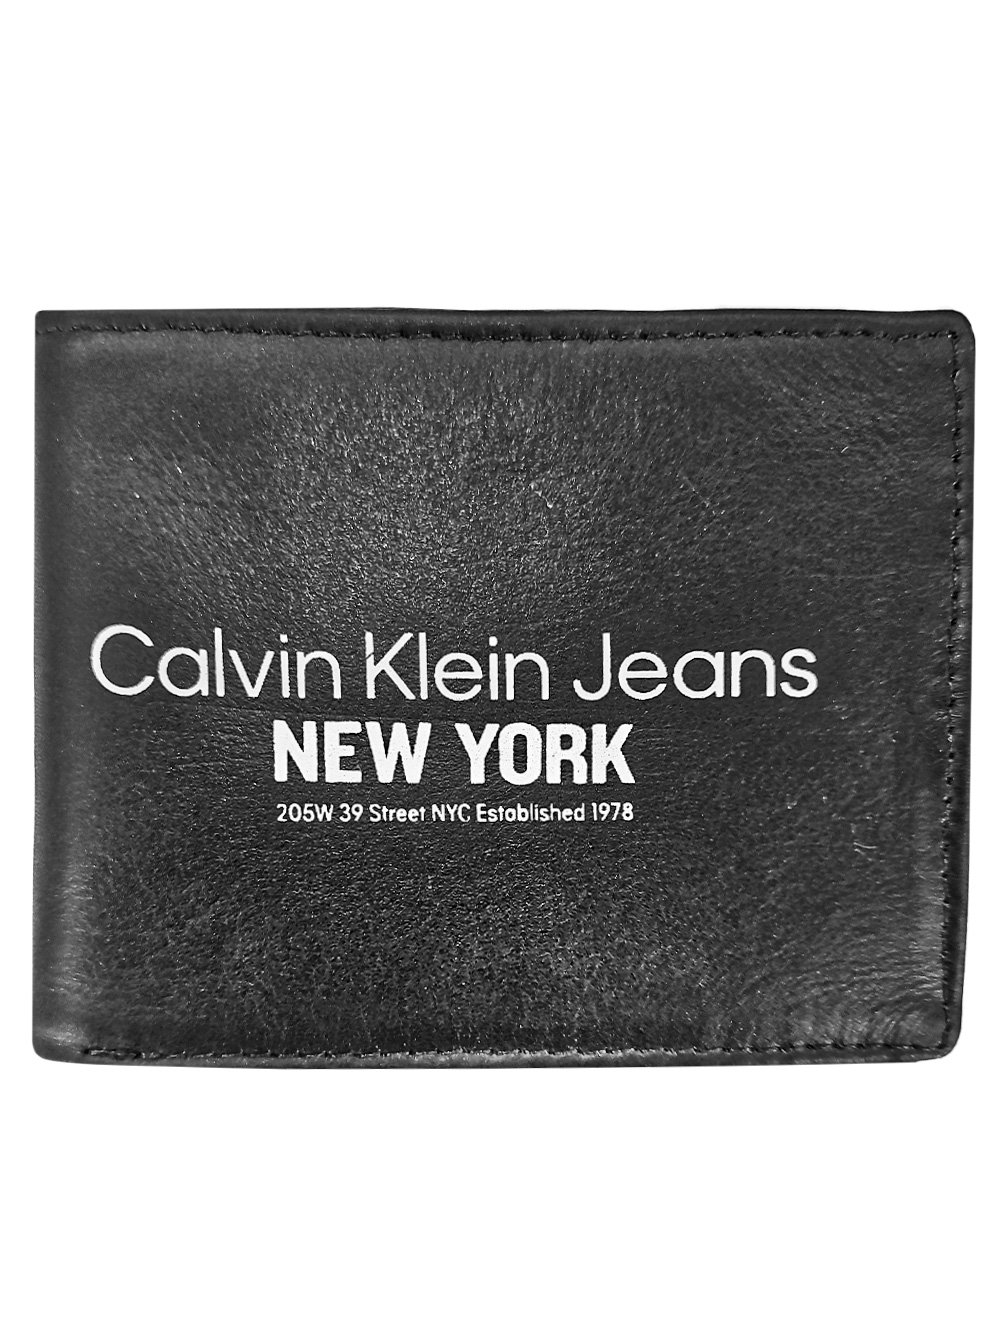 Carteira Calvin Klein Jeans Masculina CKJ Silk New York Preta